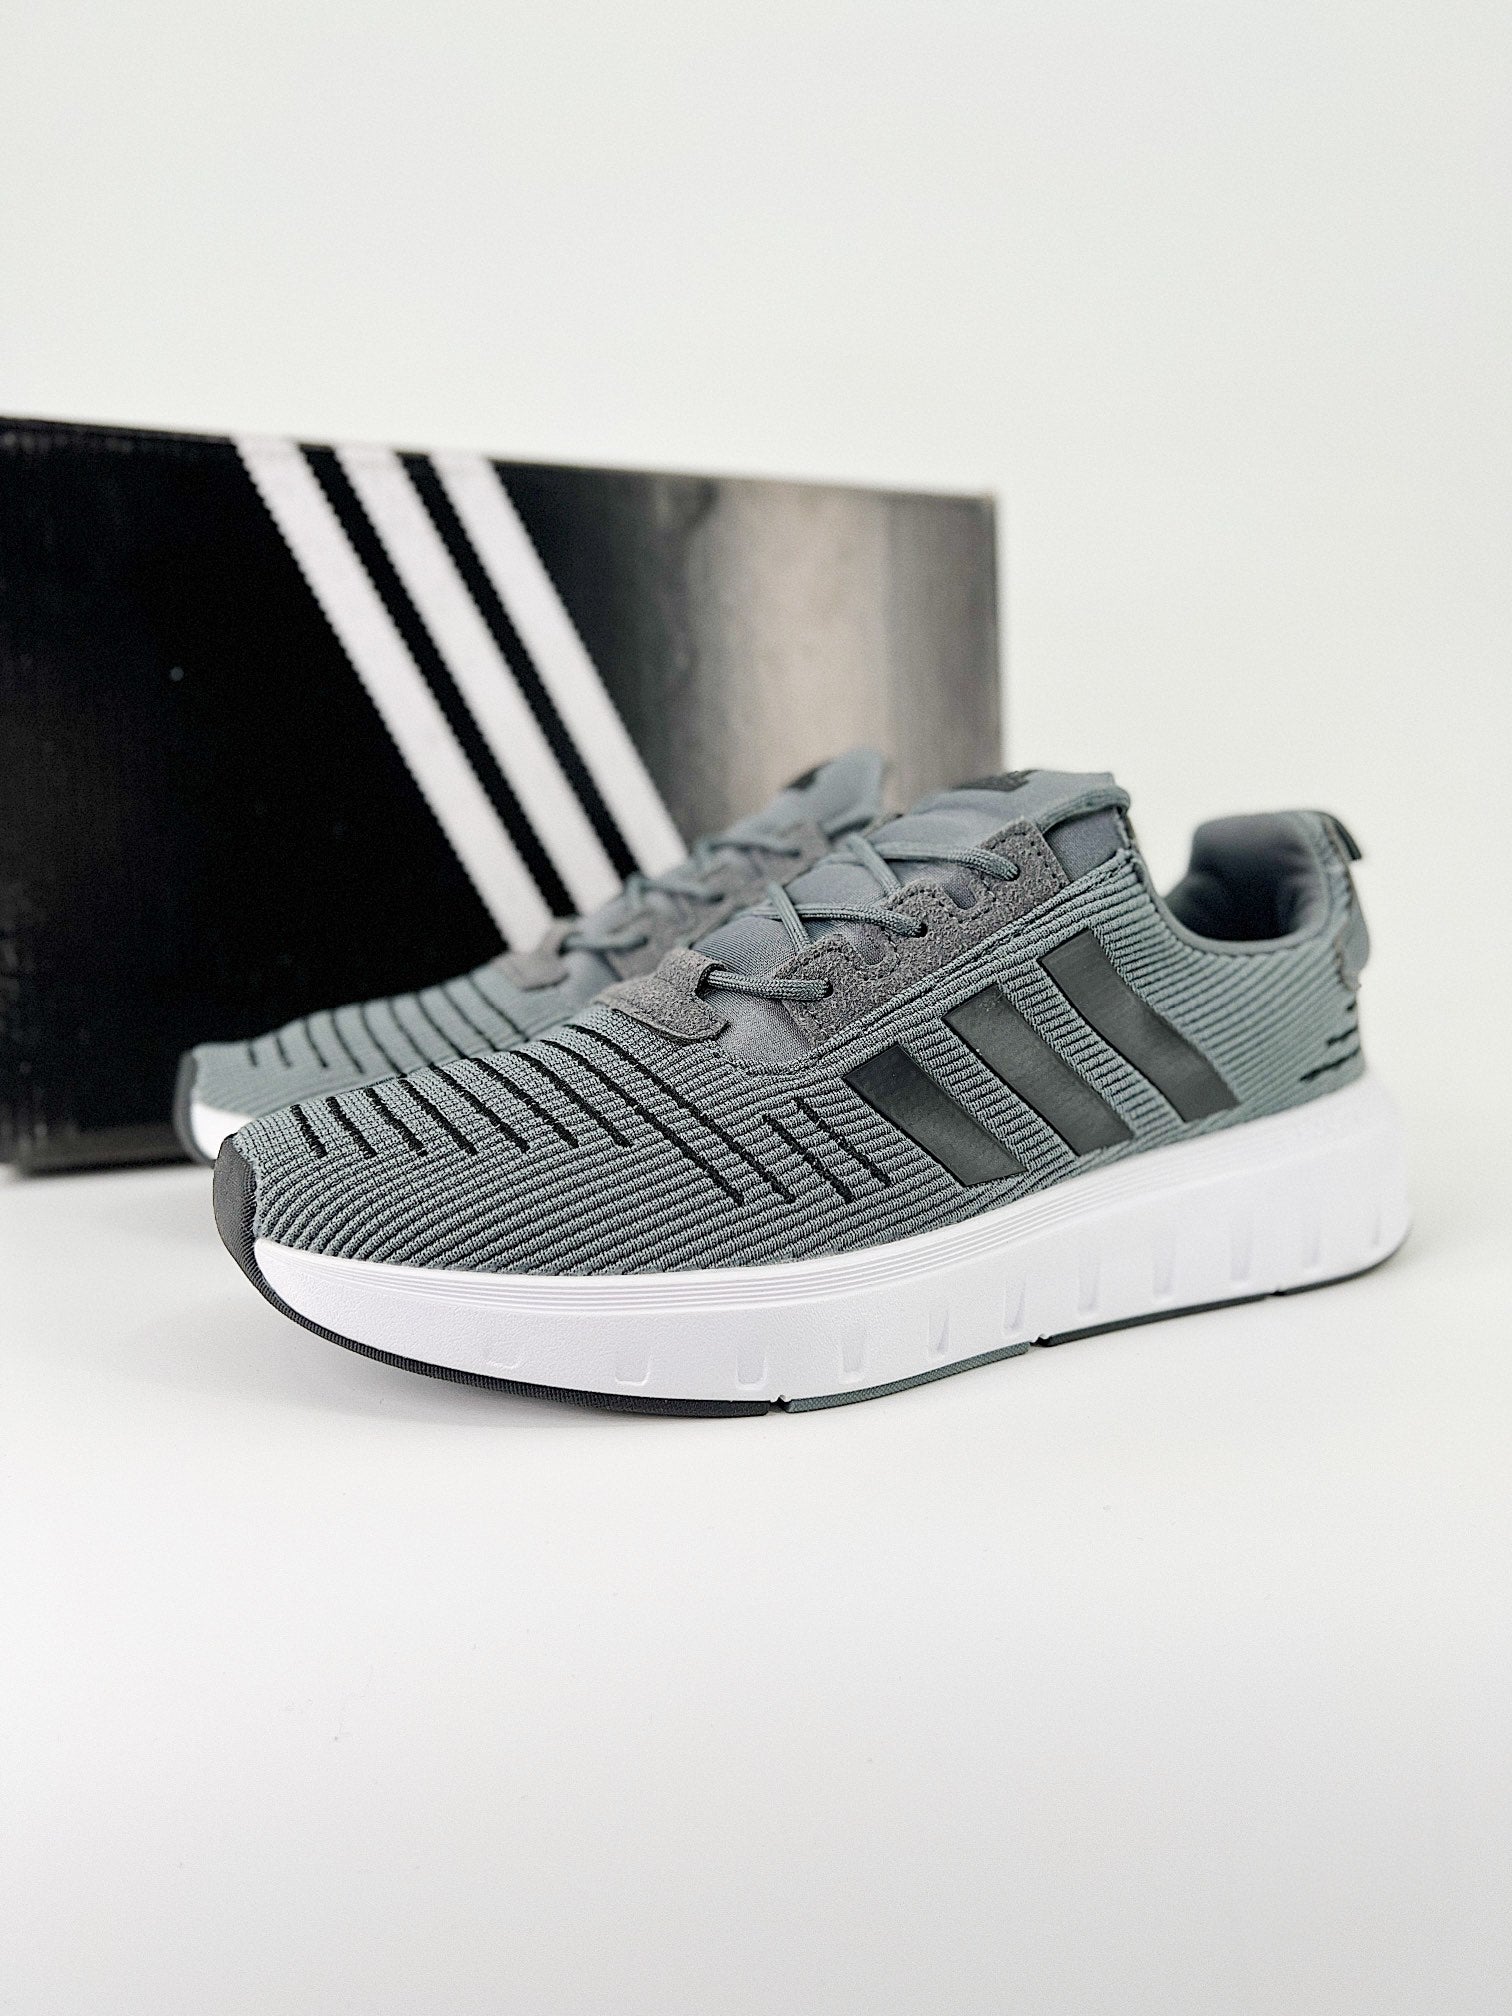 Adidas RUN swift grey and black